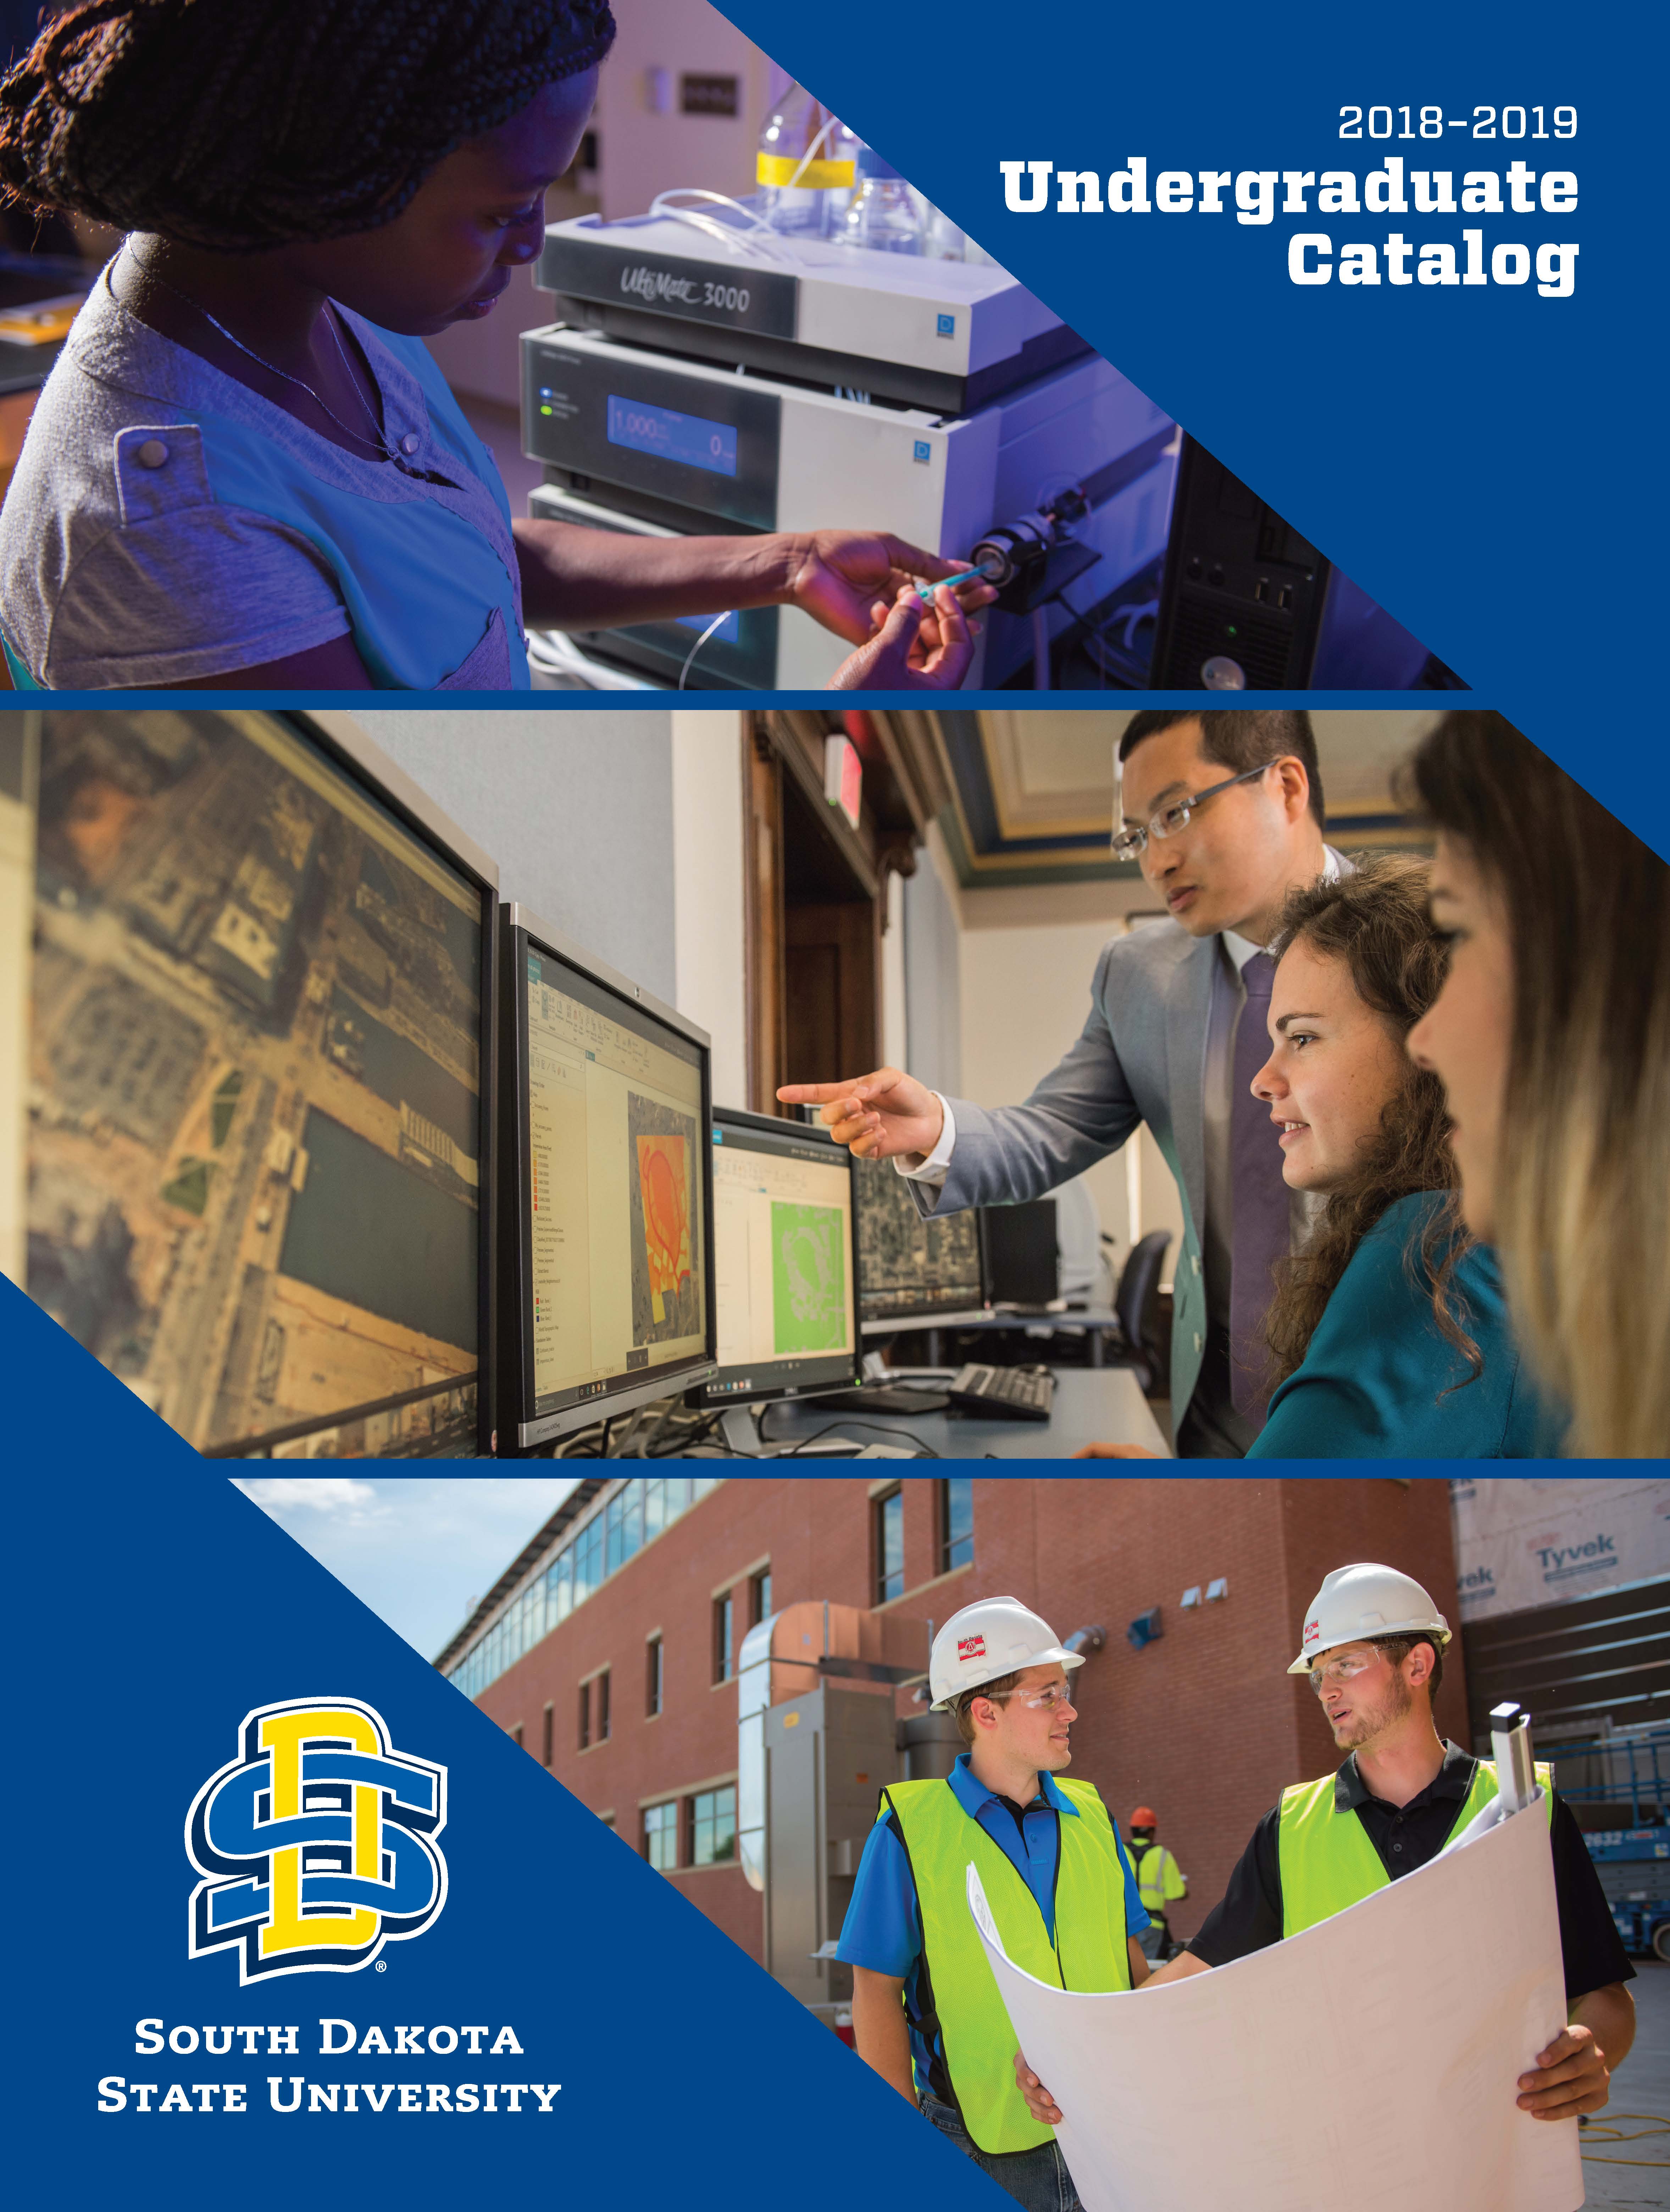 SDSU 2018-2019 Undergraduate Catalog Cover